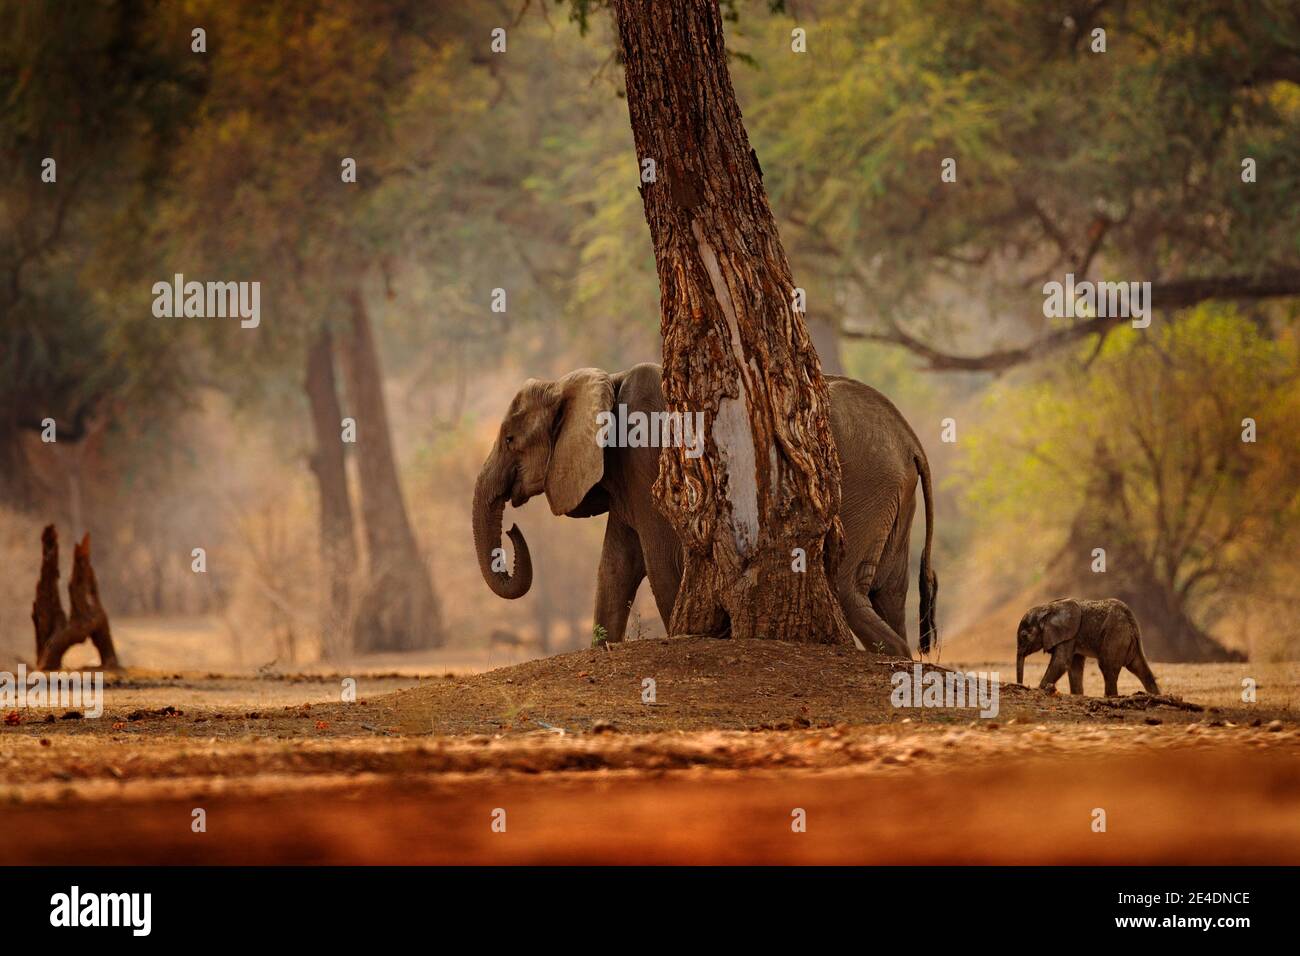 Elefant mit Baby. Elefant im Mana Pools NP, Simbabwe in Afrika. Großes Tier im alten Wald, Abendlicht, Sonnenuntergang. Magische Wildtierszene i Stockfoto